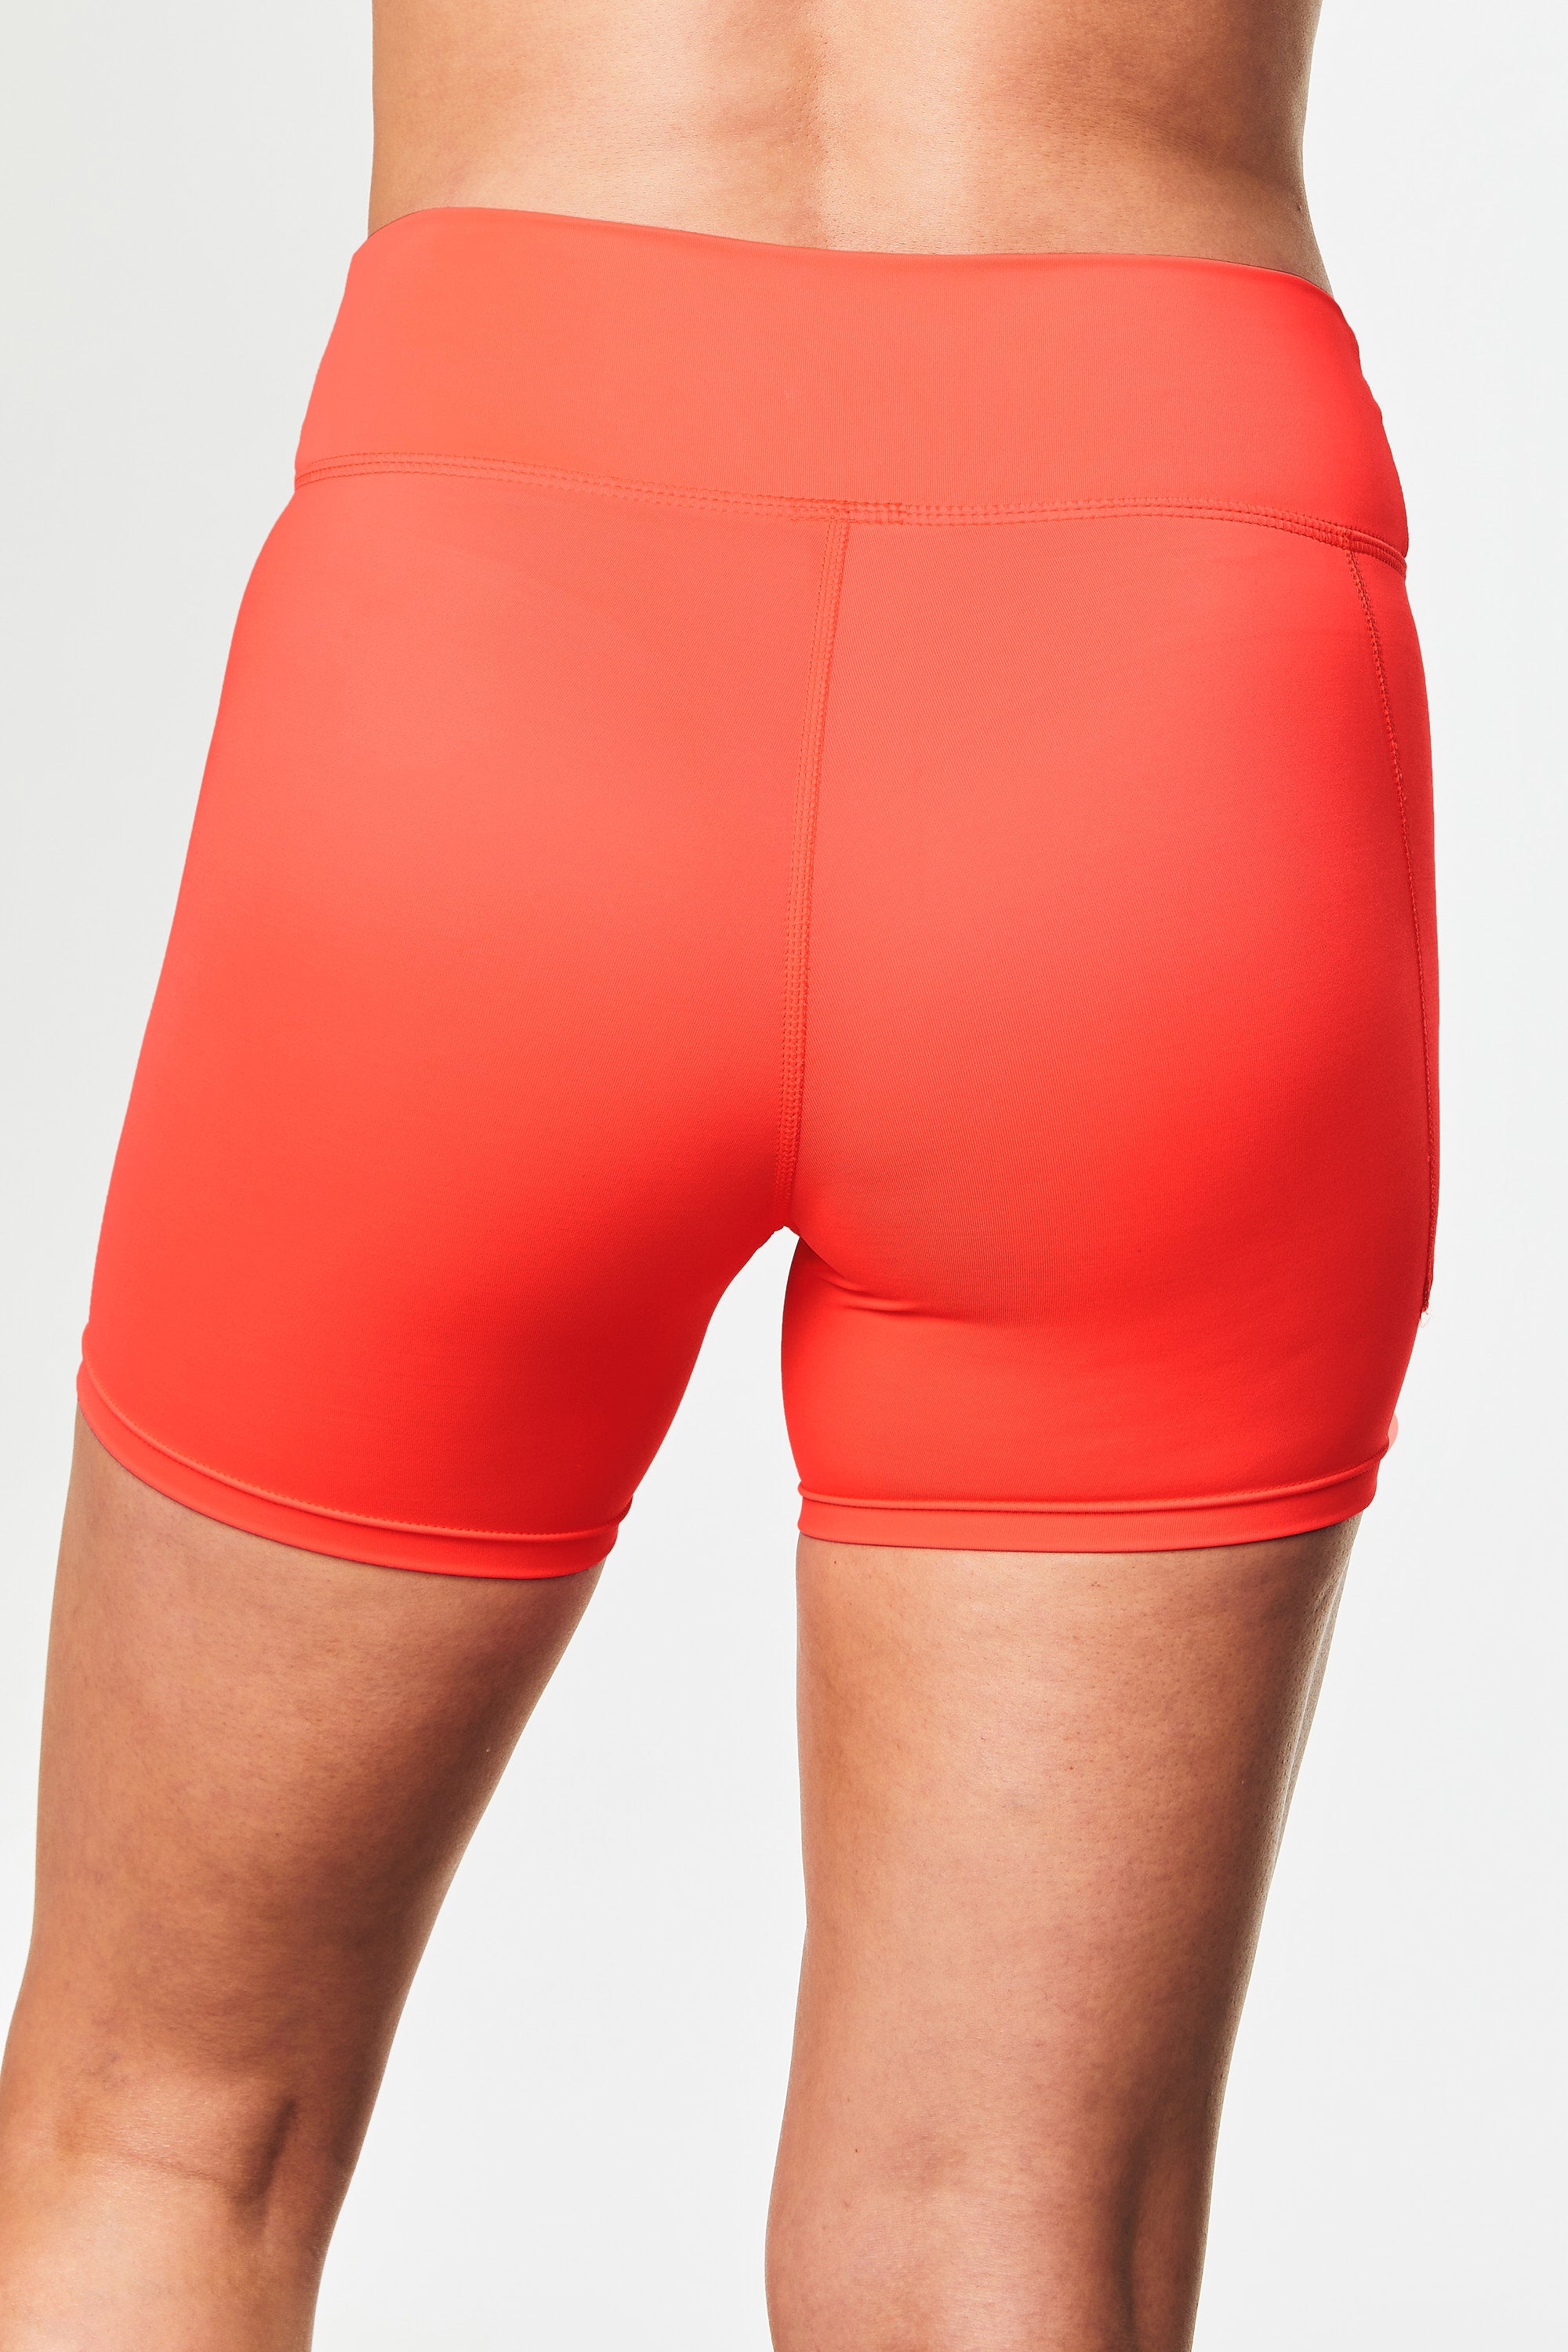 Bly Bloomer Shorts In Orange